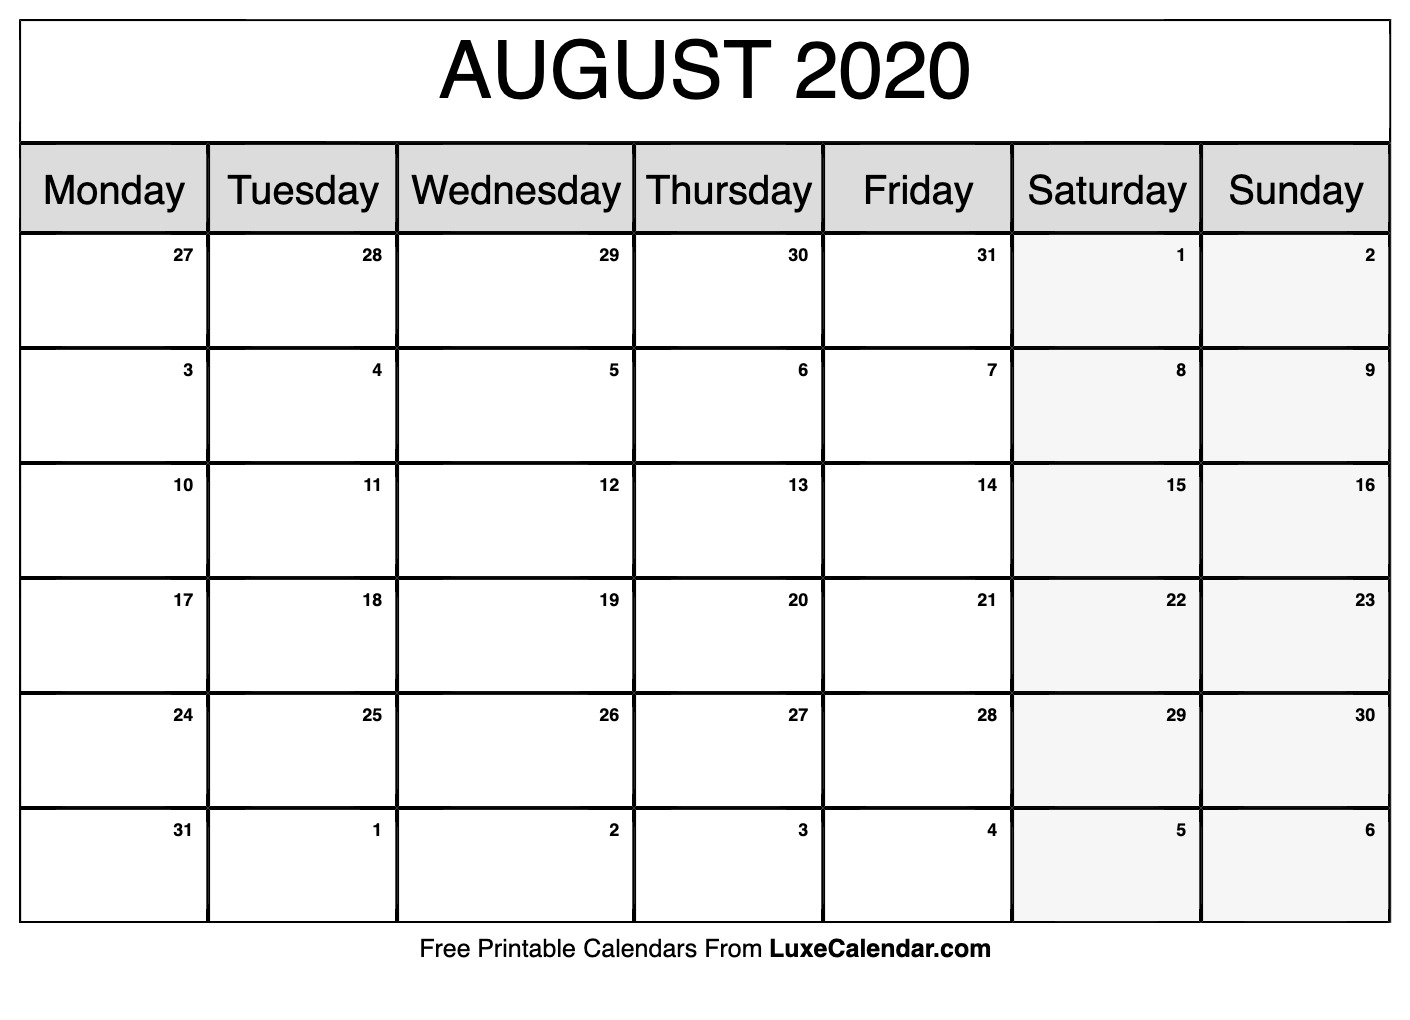 Blank August 2020 Calendar Printable - Luxe Calendar